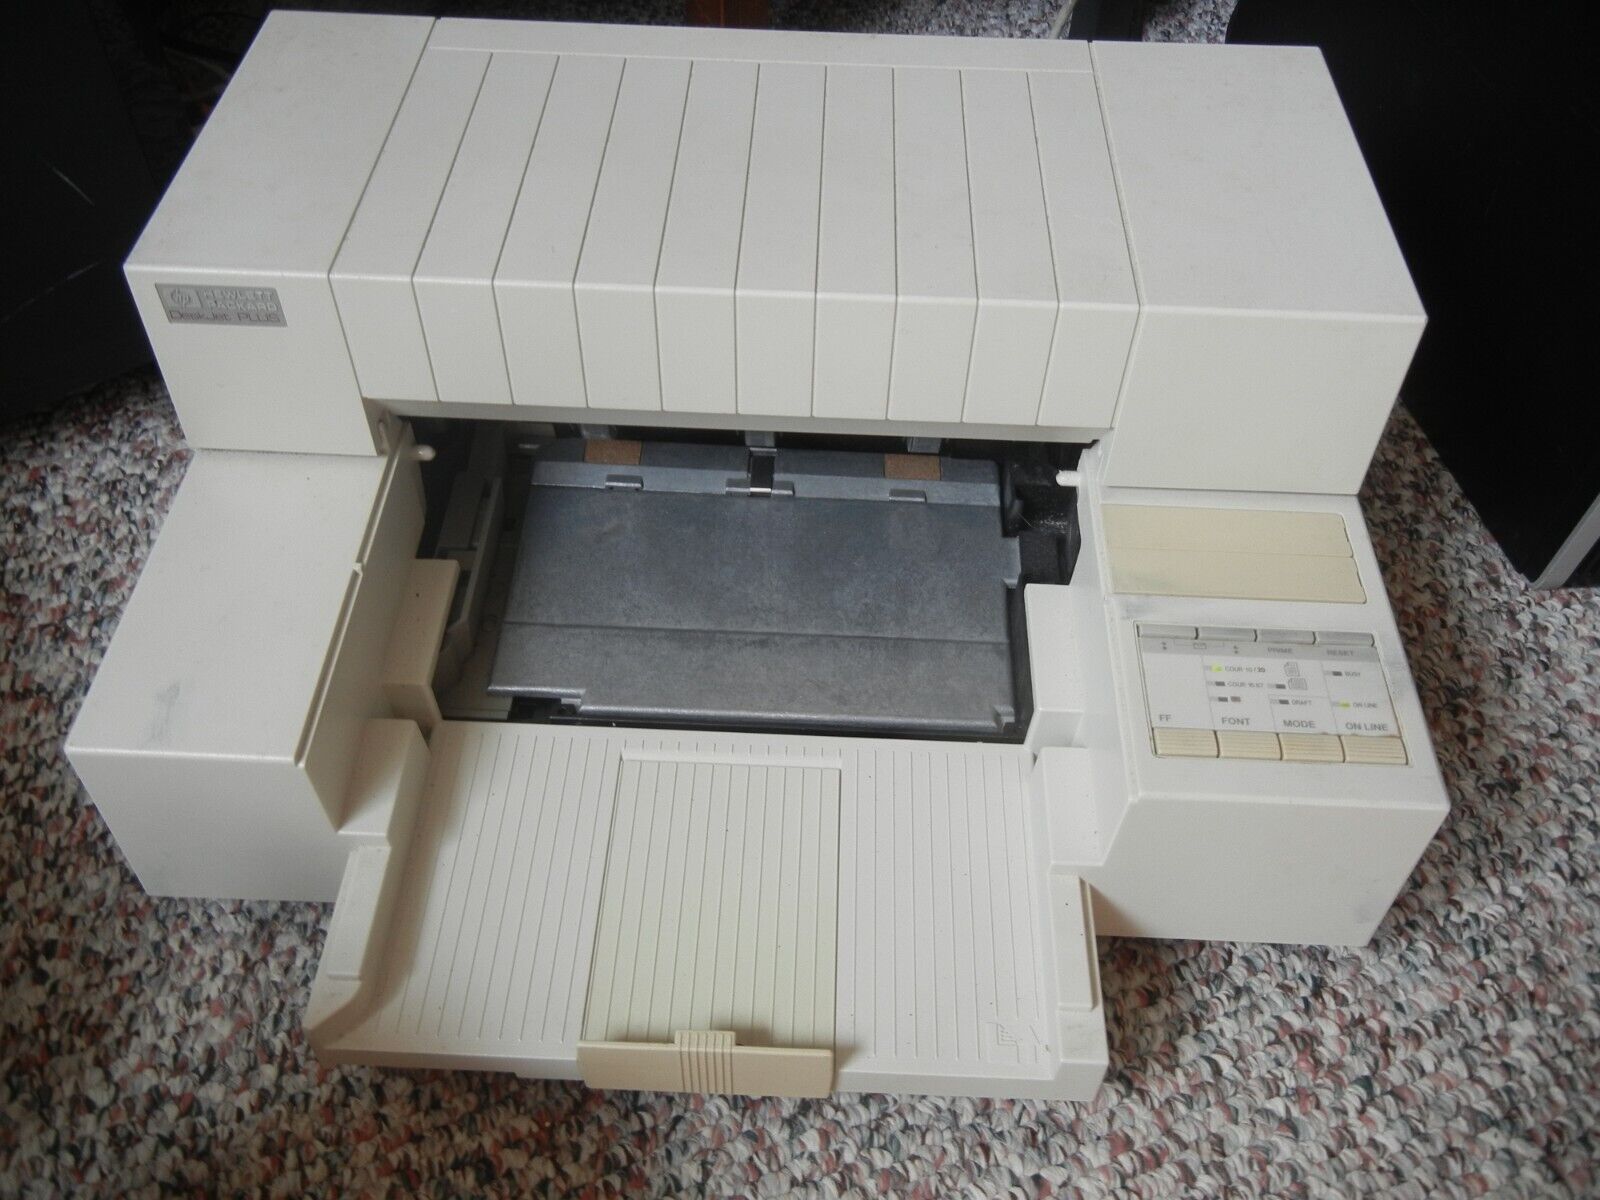 Vintage HP Deskjet Plus Printer. No Ink and paper output tray missing